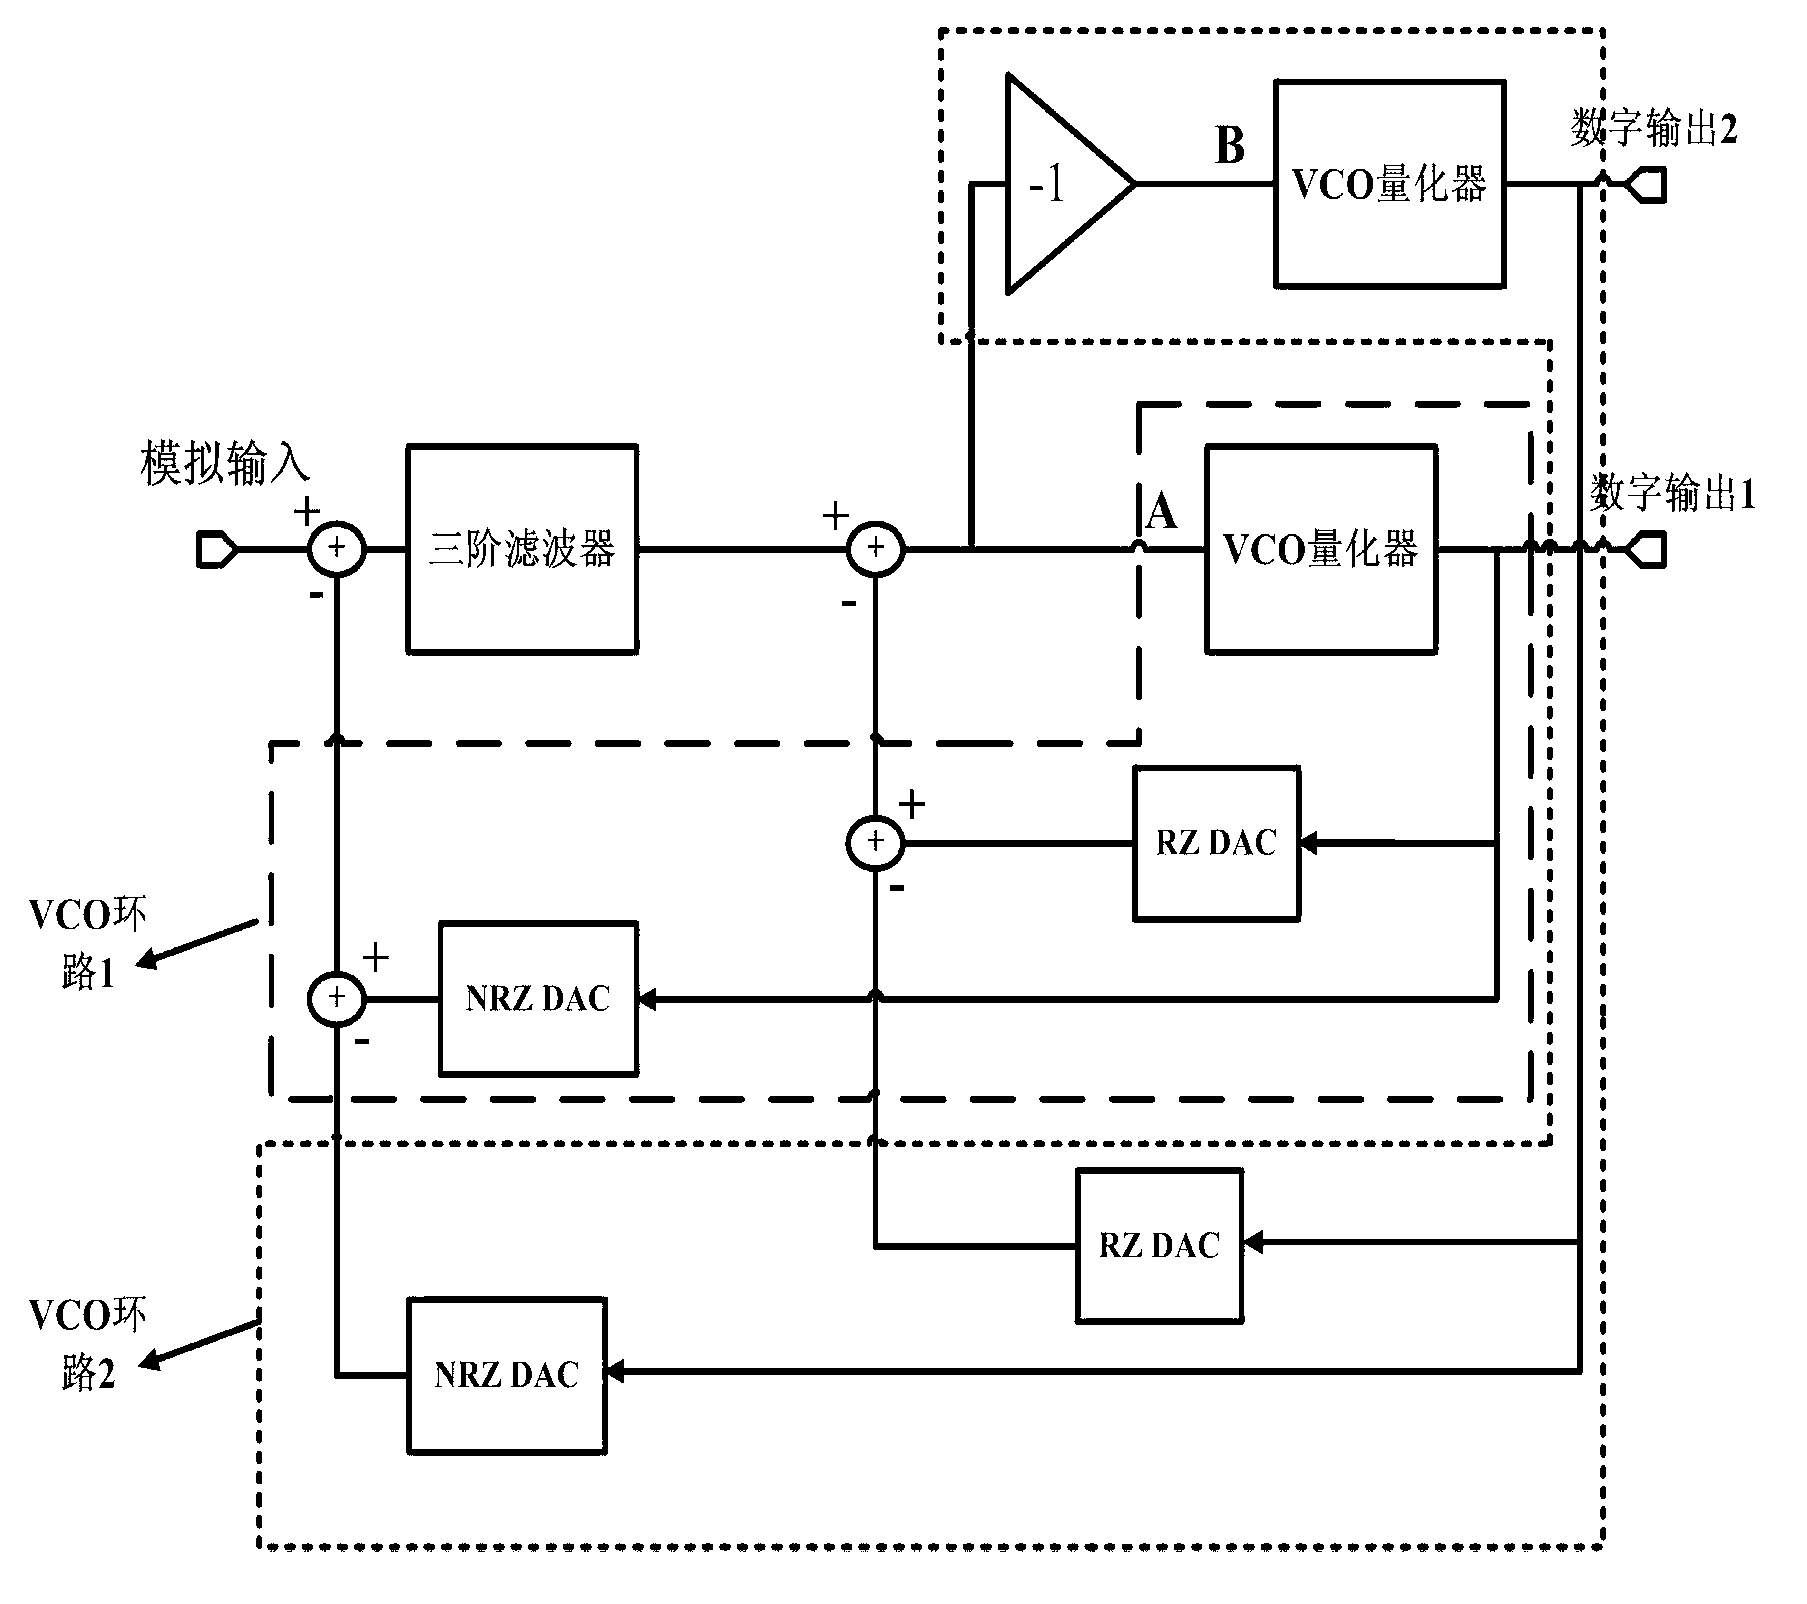 Dual-voltage-controlled oscillator loop-based Sigma-Delta analog to digital converter